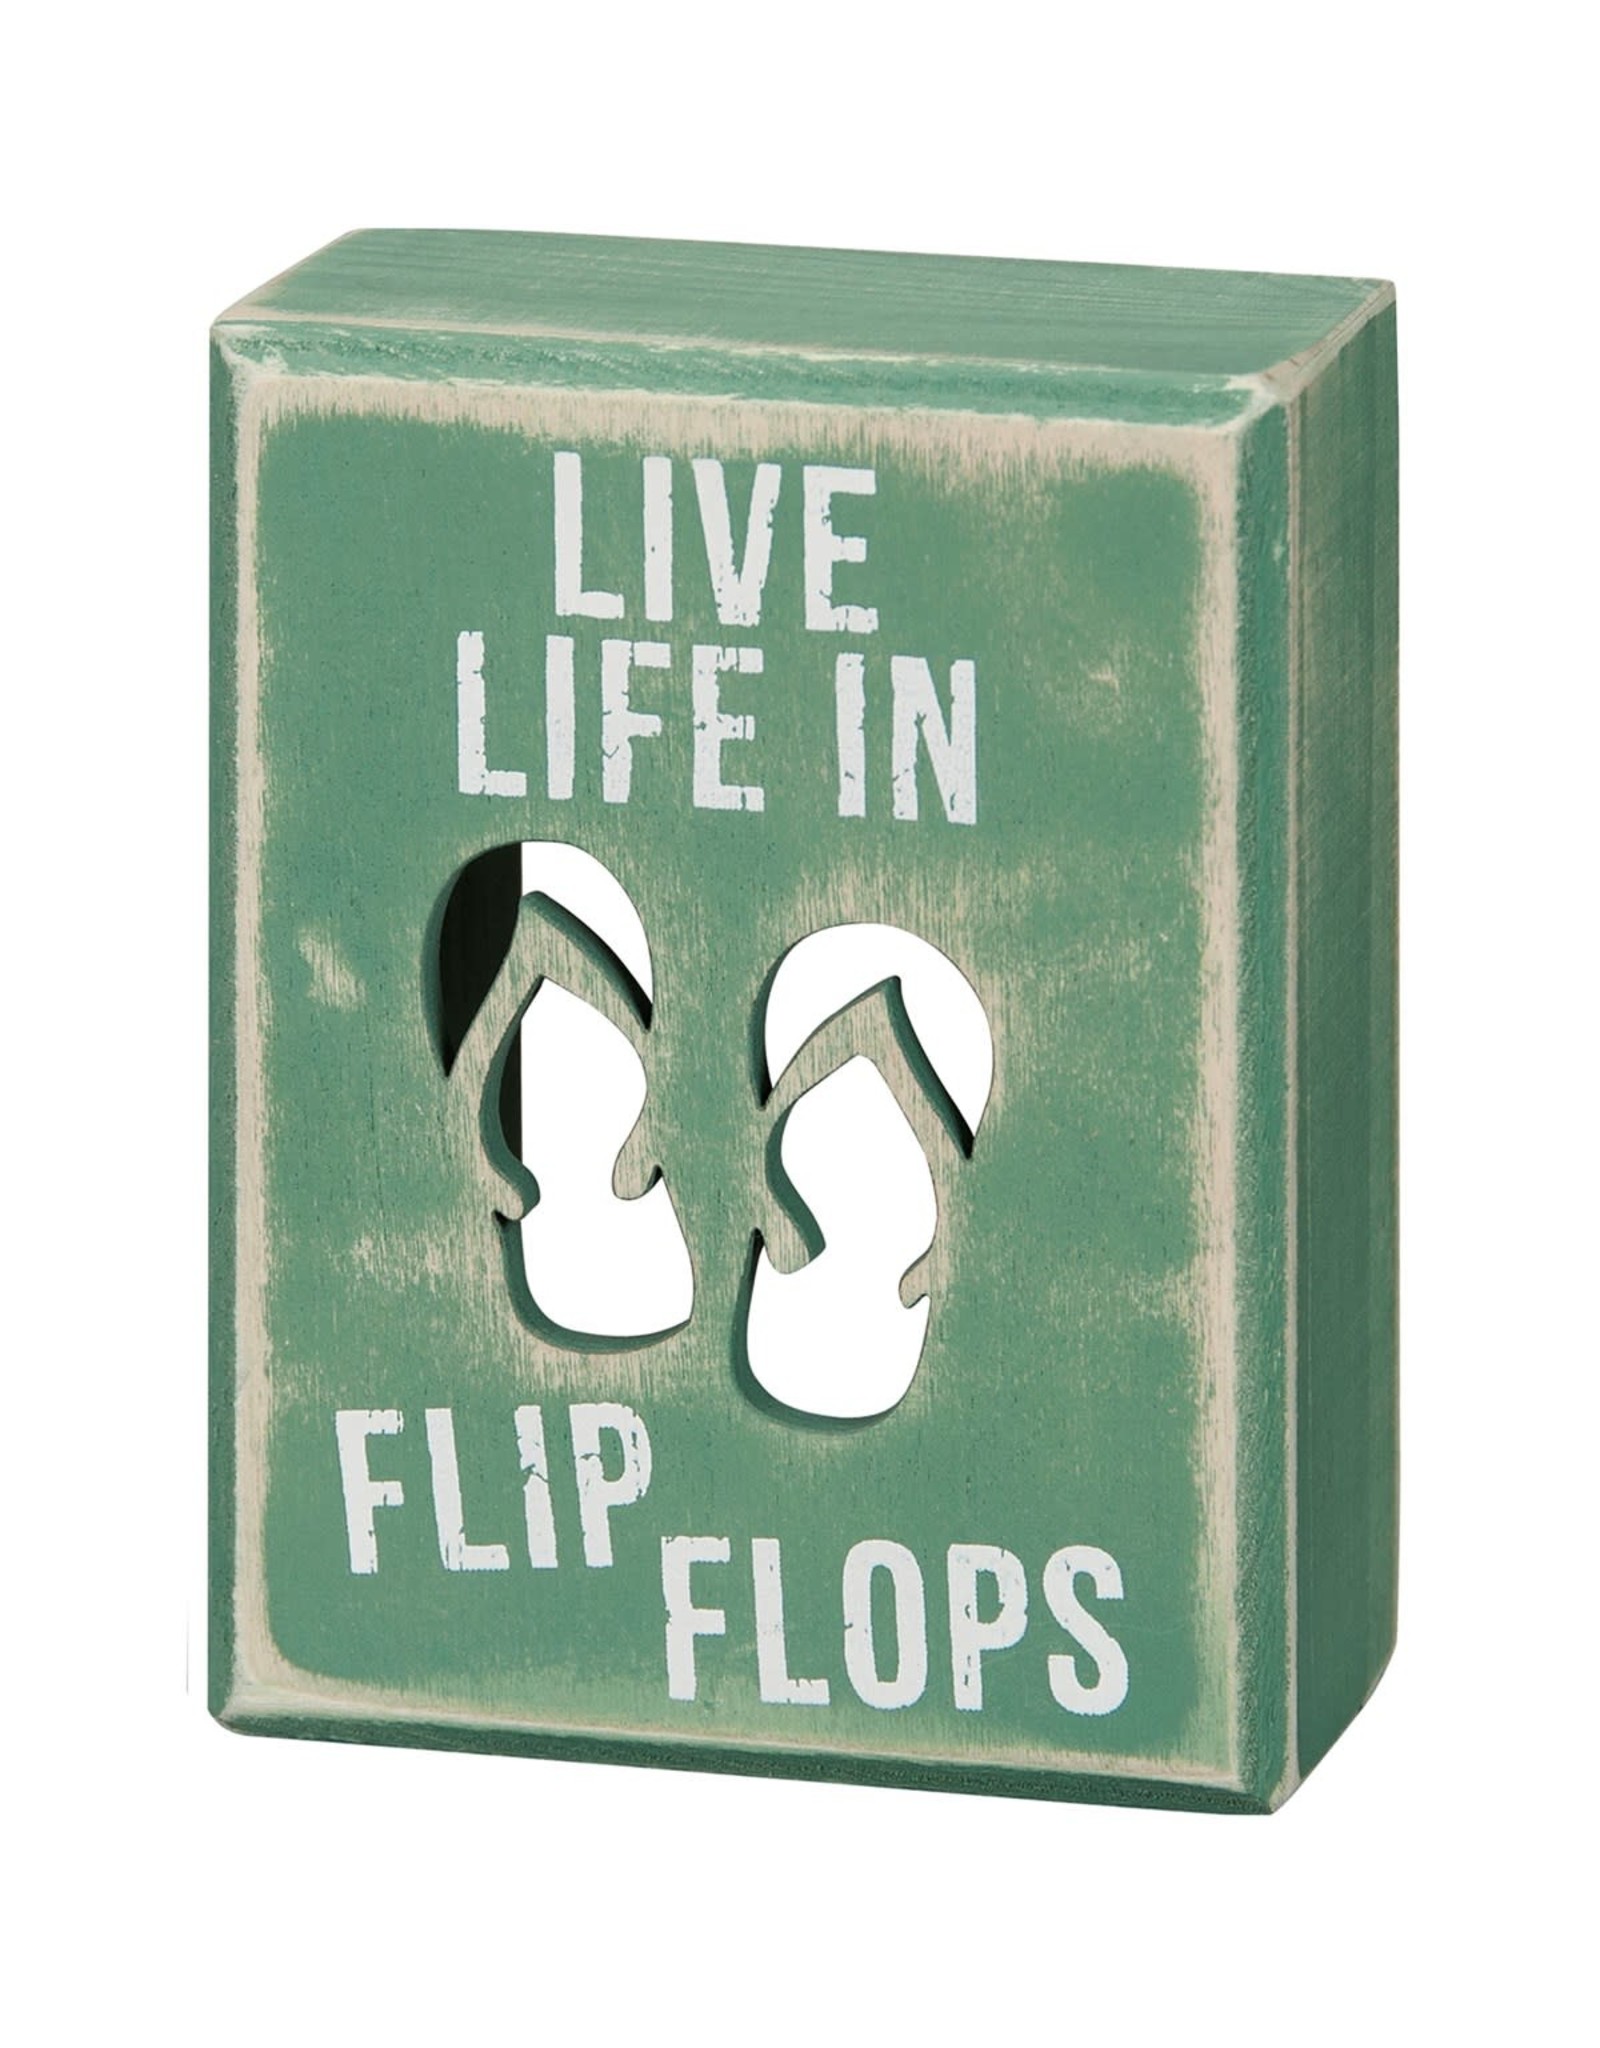 Box Sign - Flip Flops